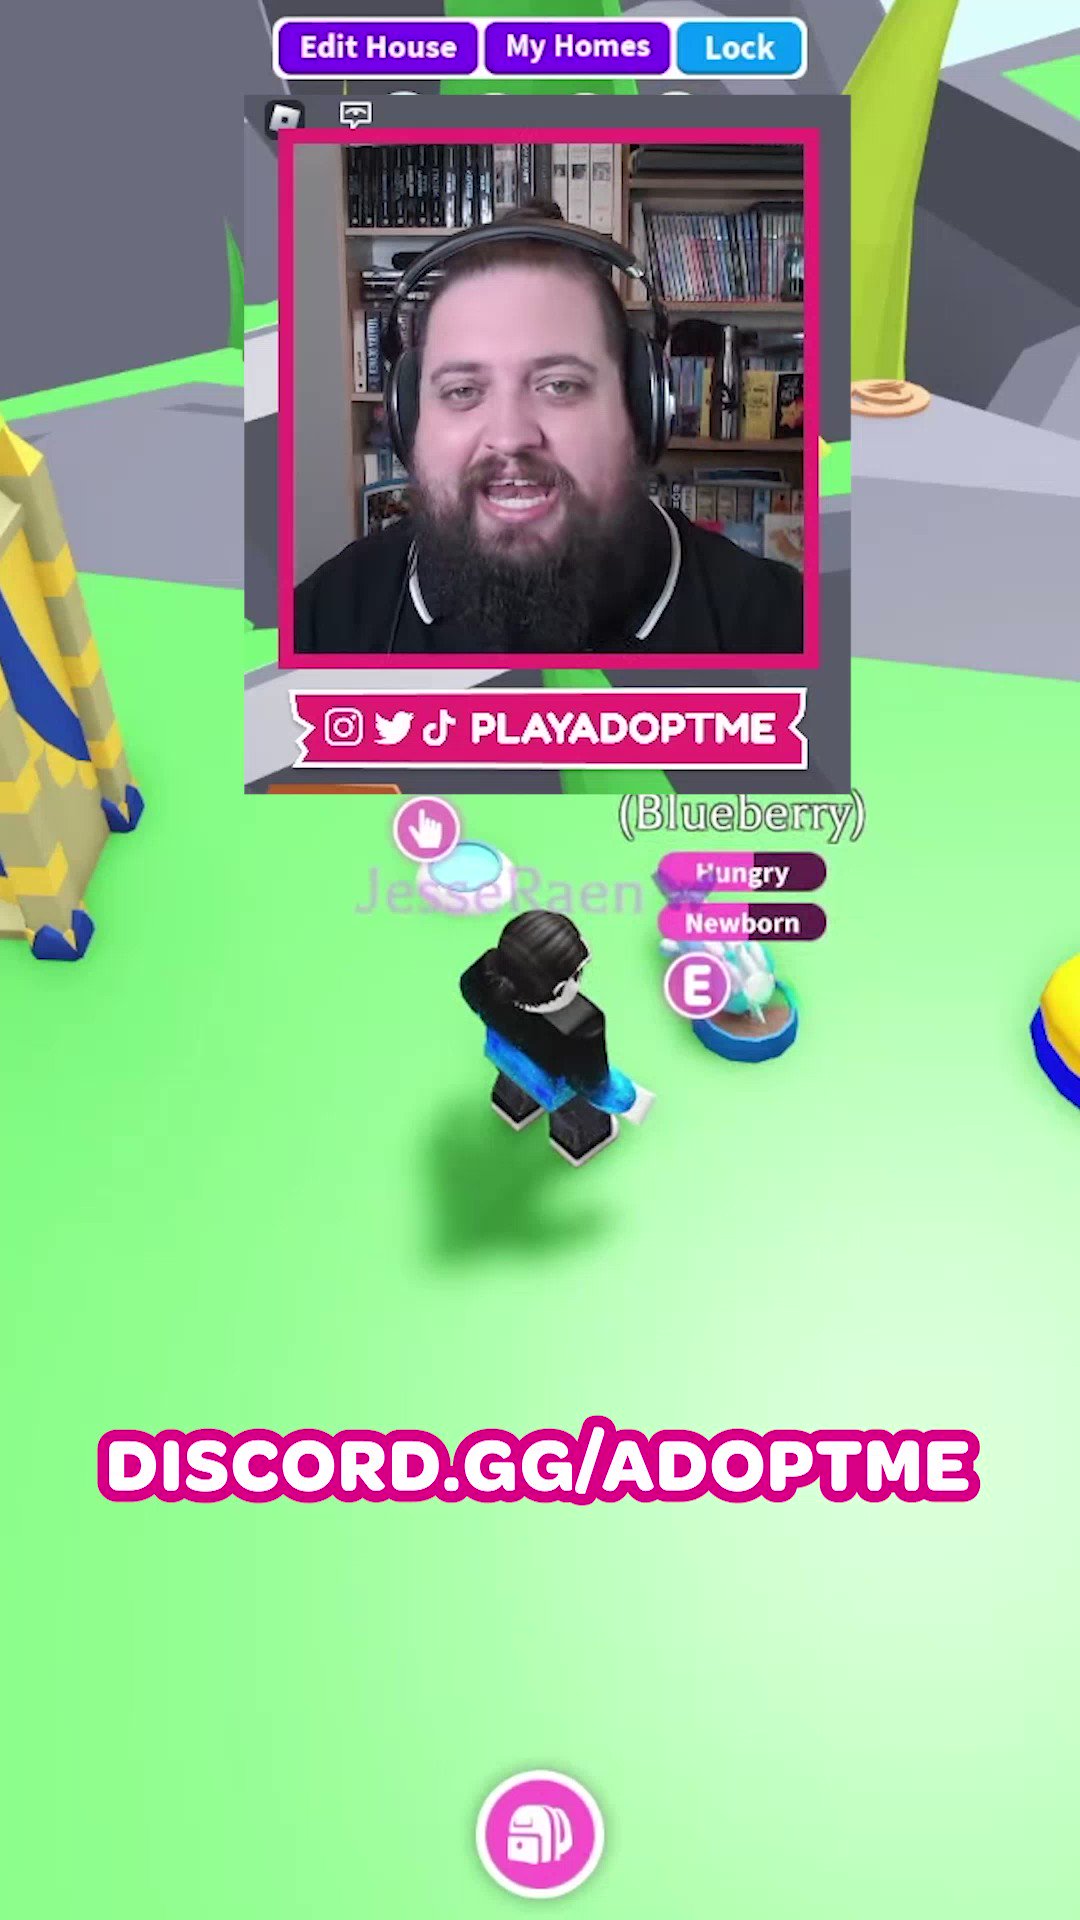 Adopt Me! – Discord